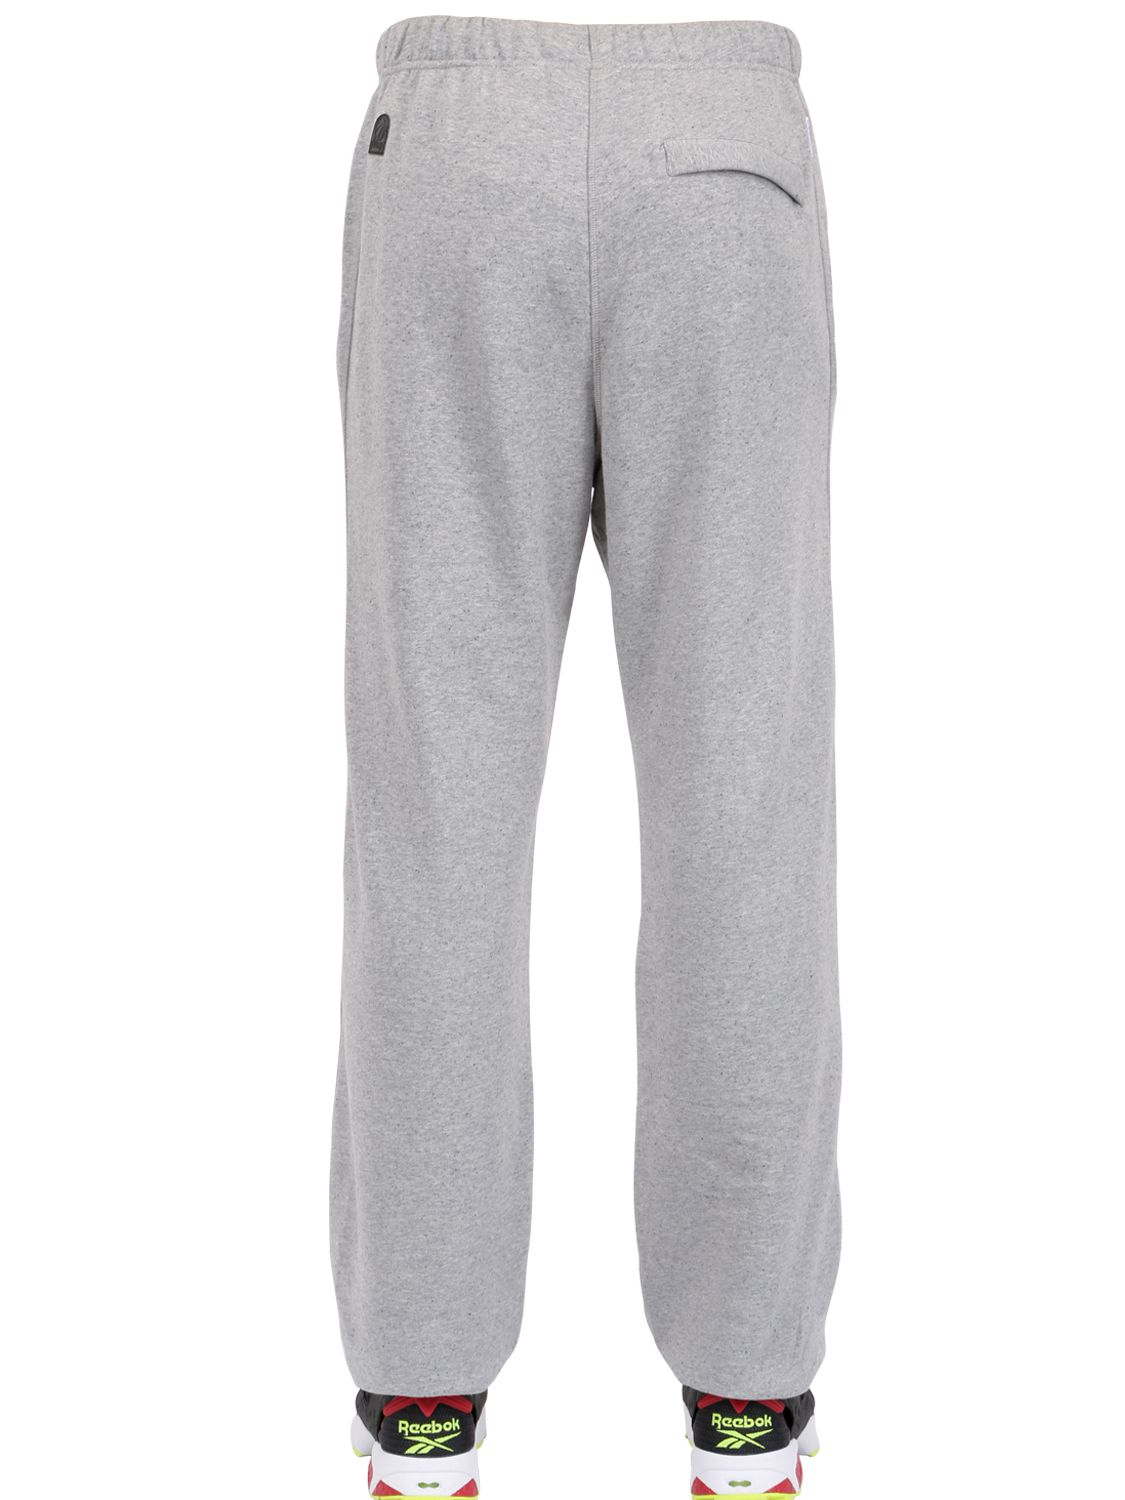 Reebok Cotton Blend Jogging Pants in Gray for Men - Lyst